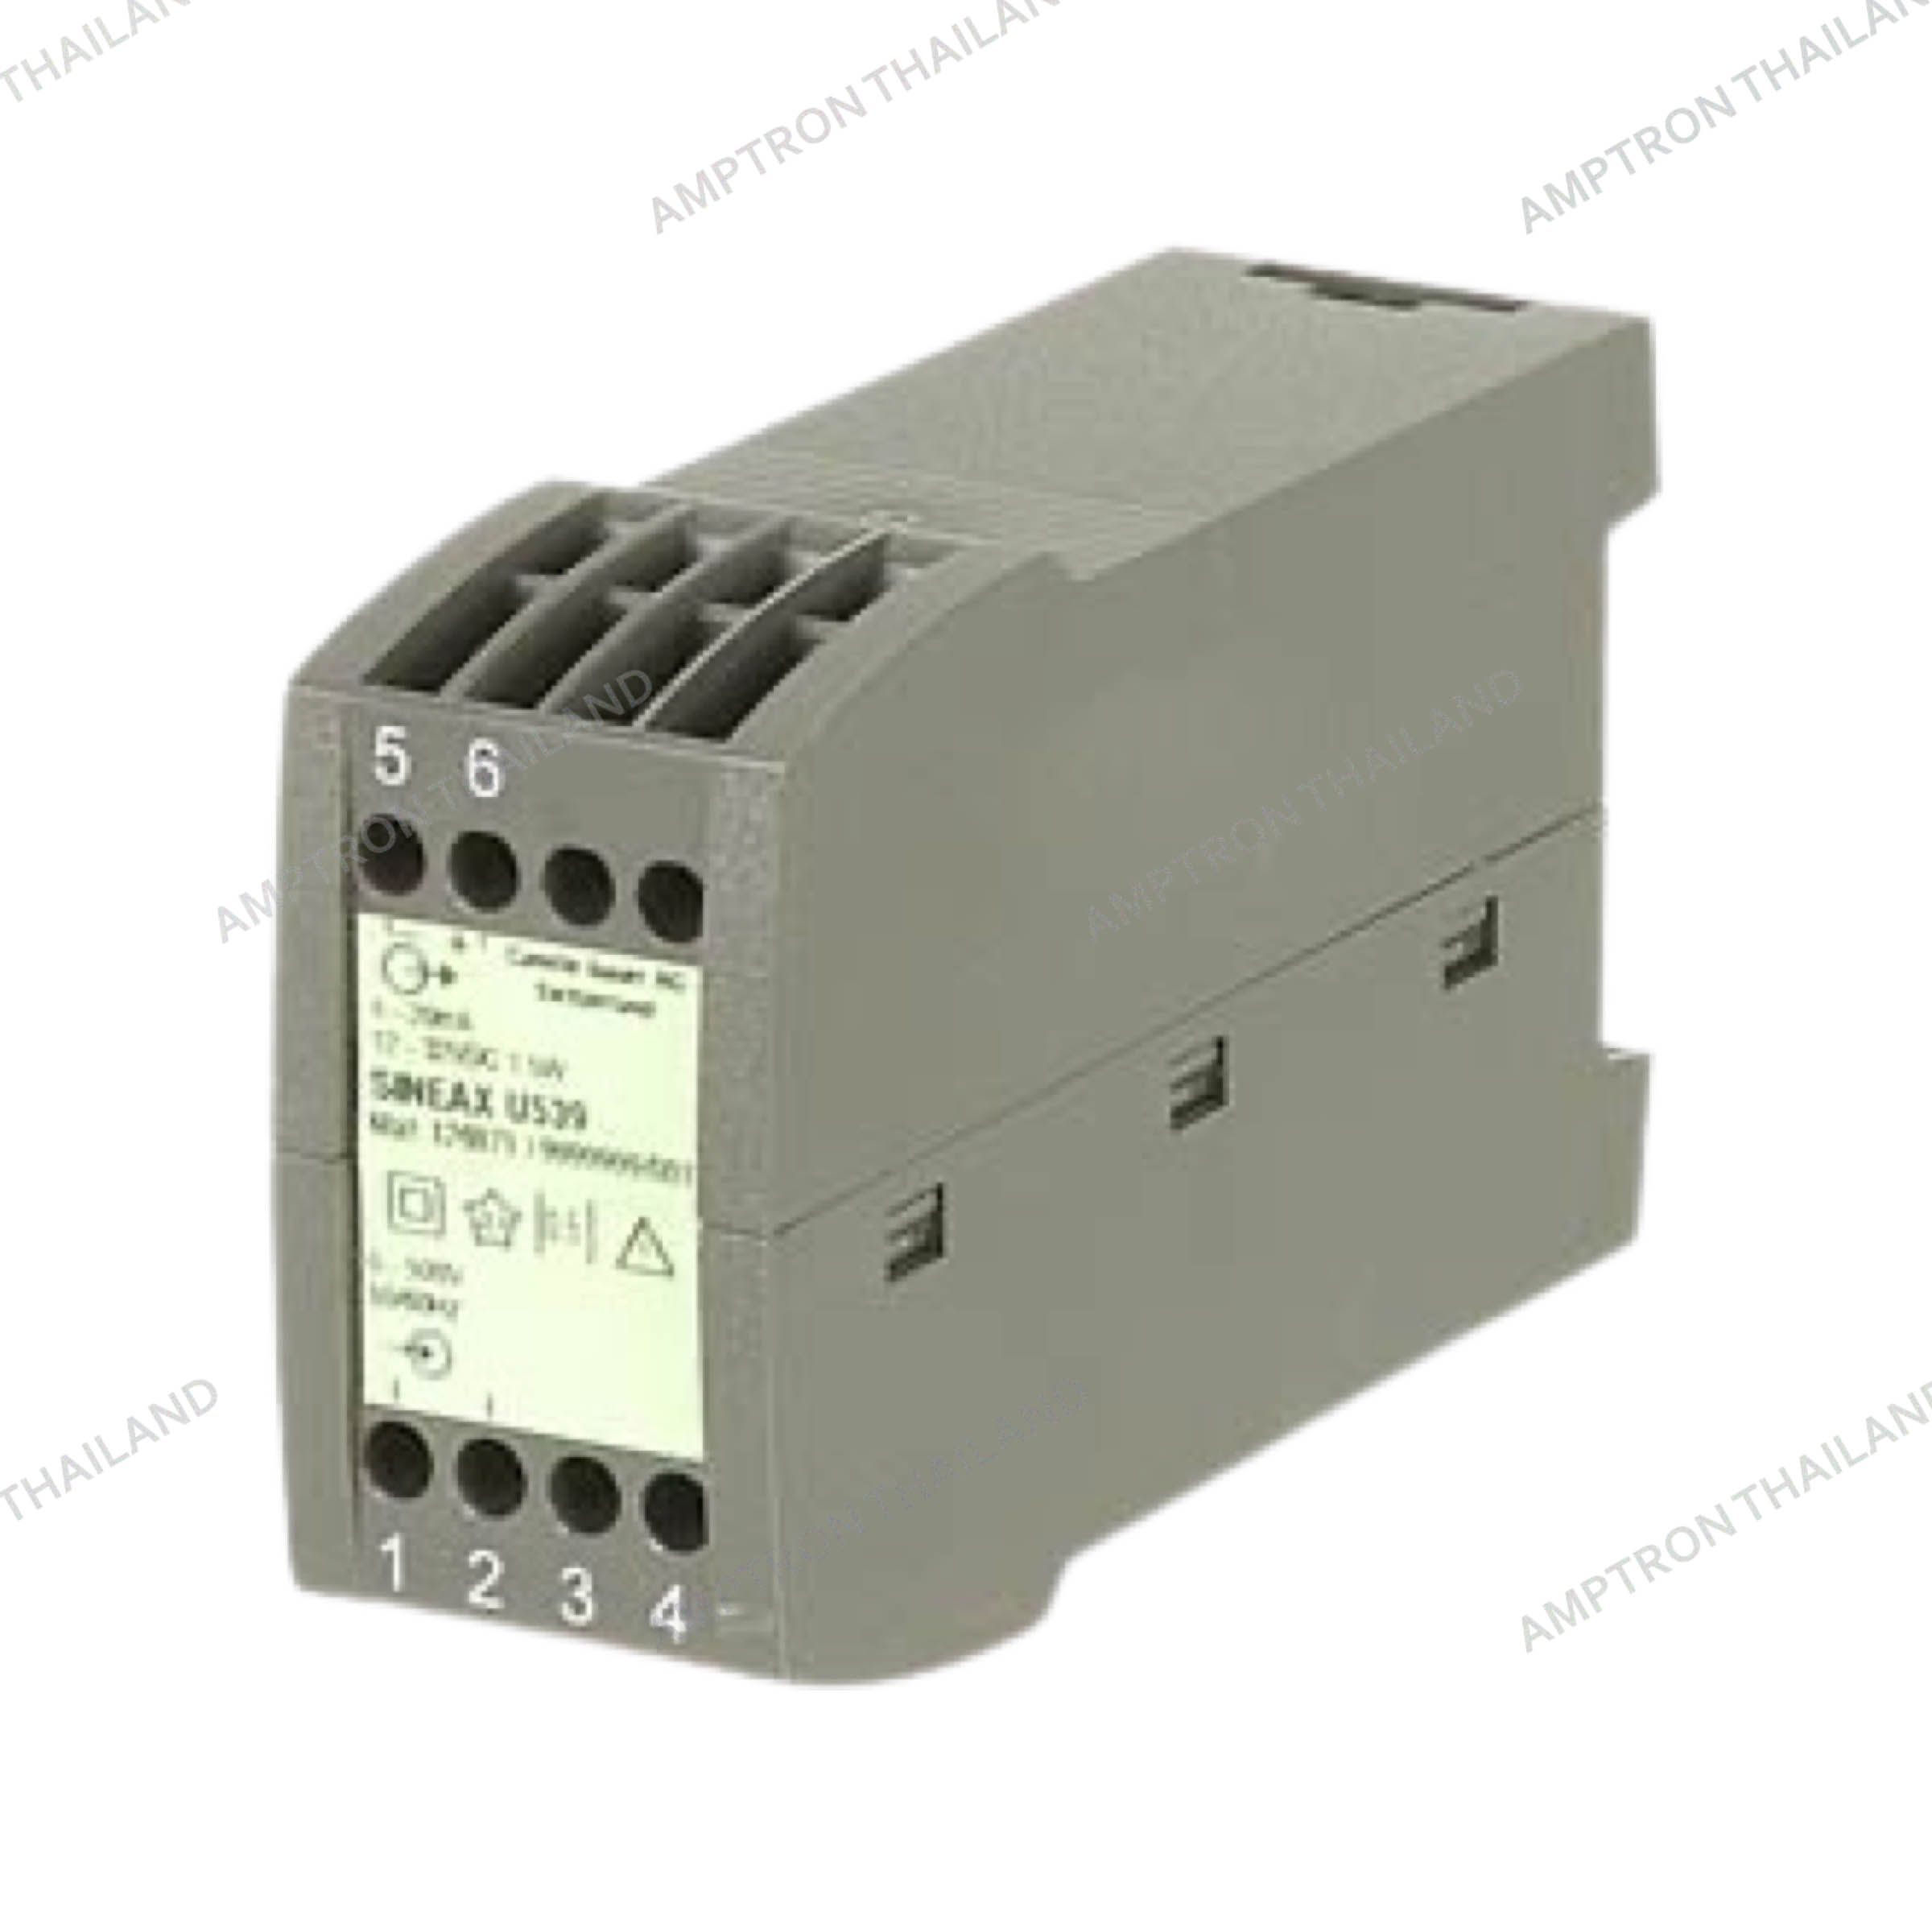 SINEAX U539 Series Transducer